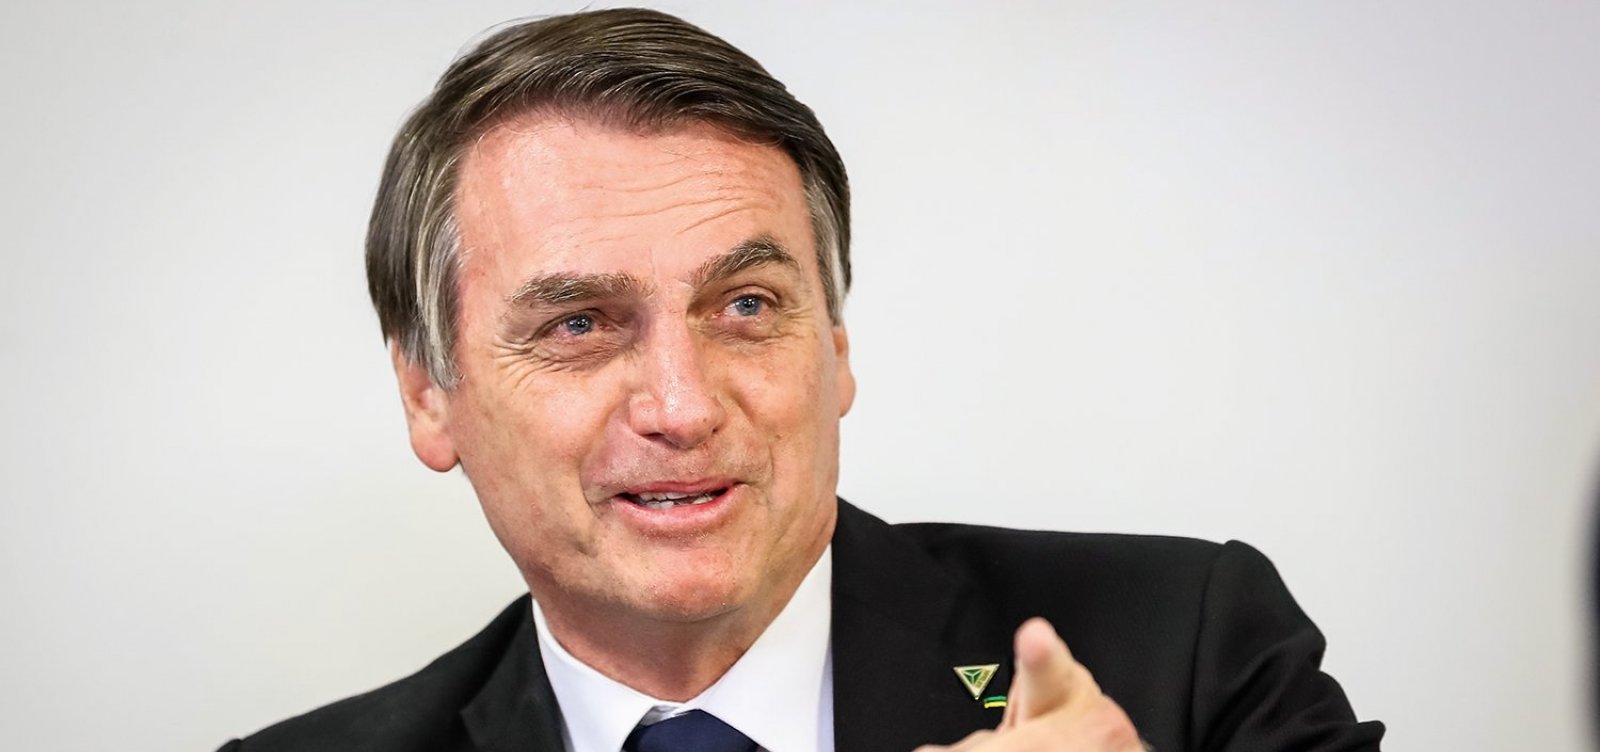 ‘Vamos enfrentar o problema? Ou o problema é o presidente’, questiona Bolsonaro